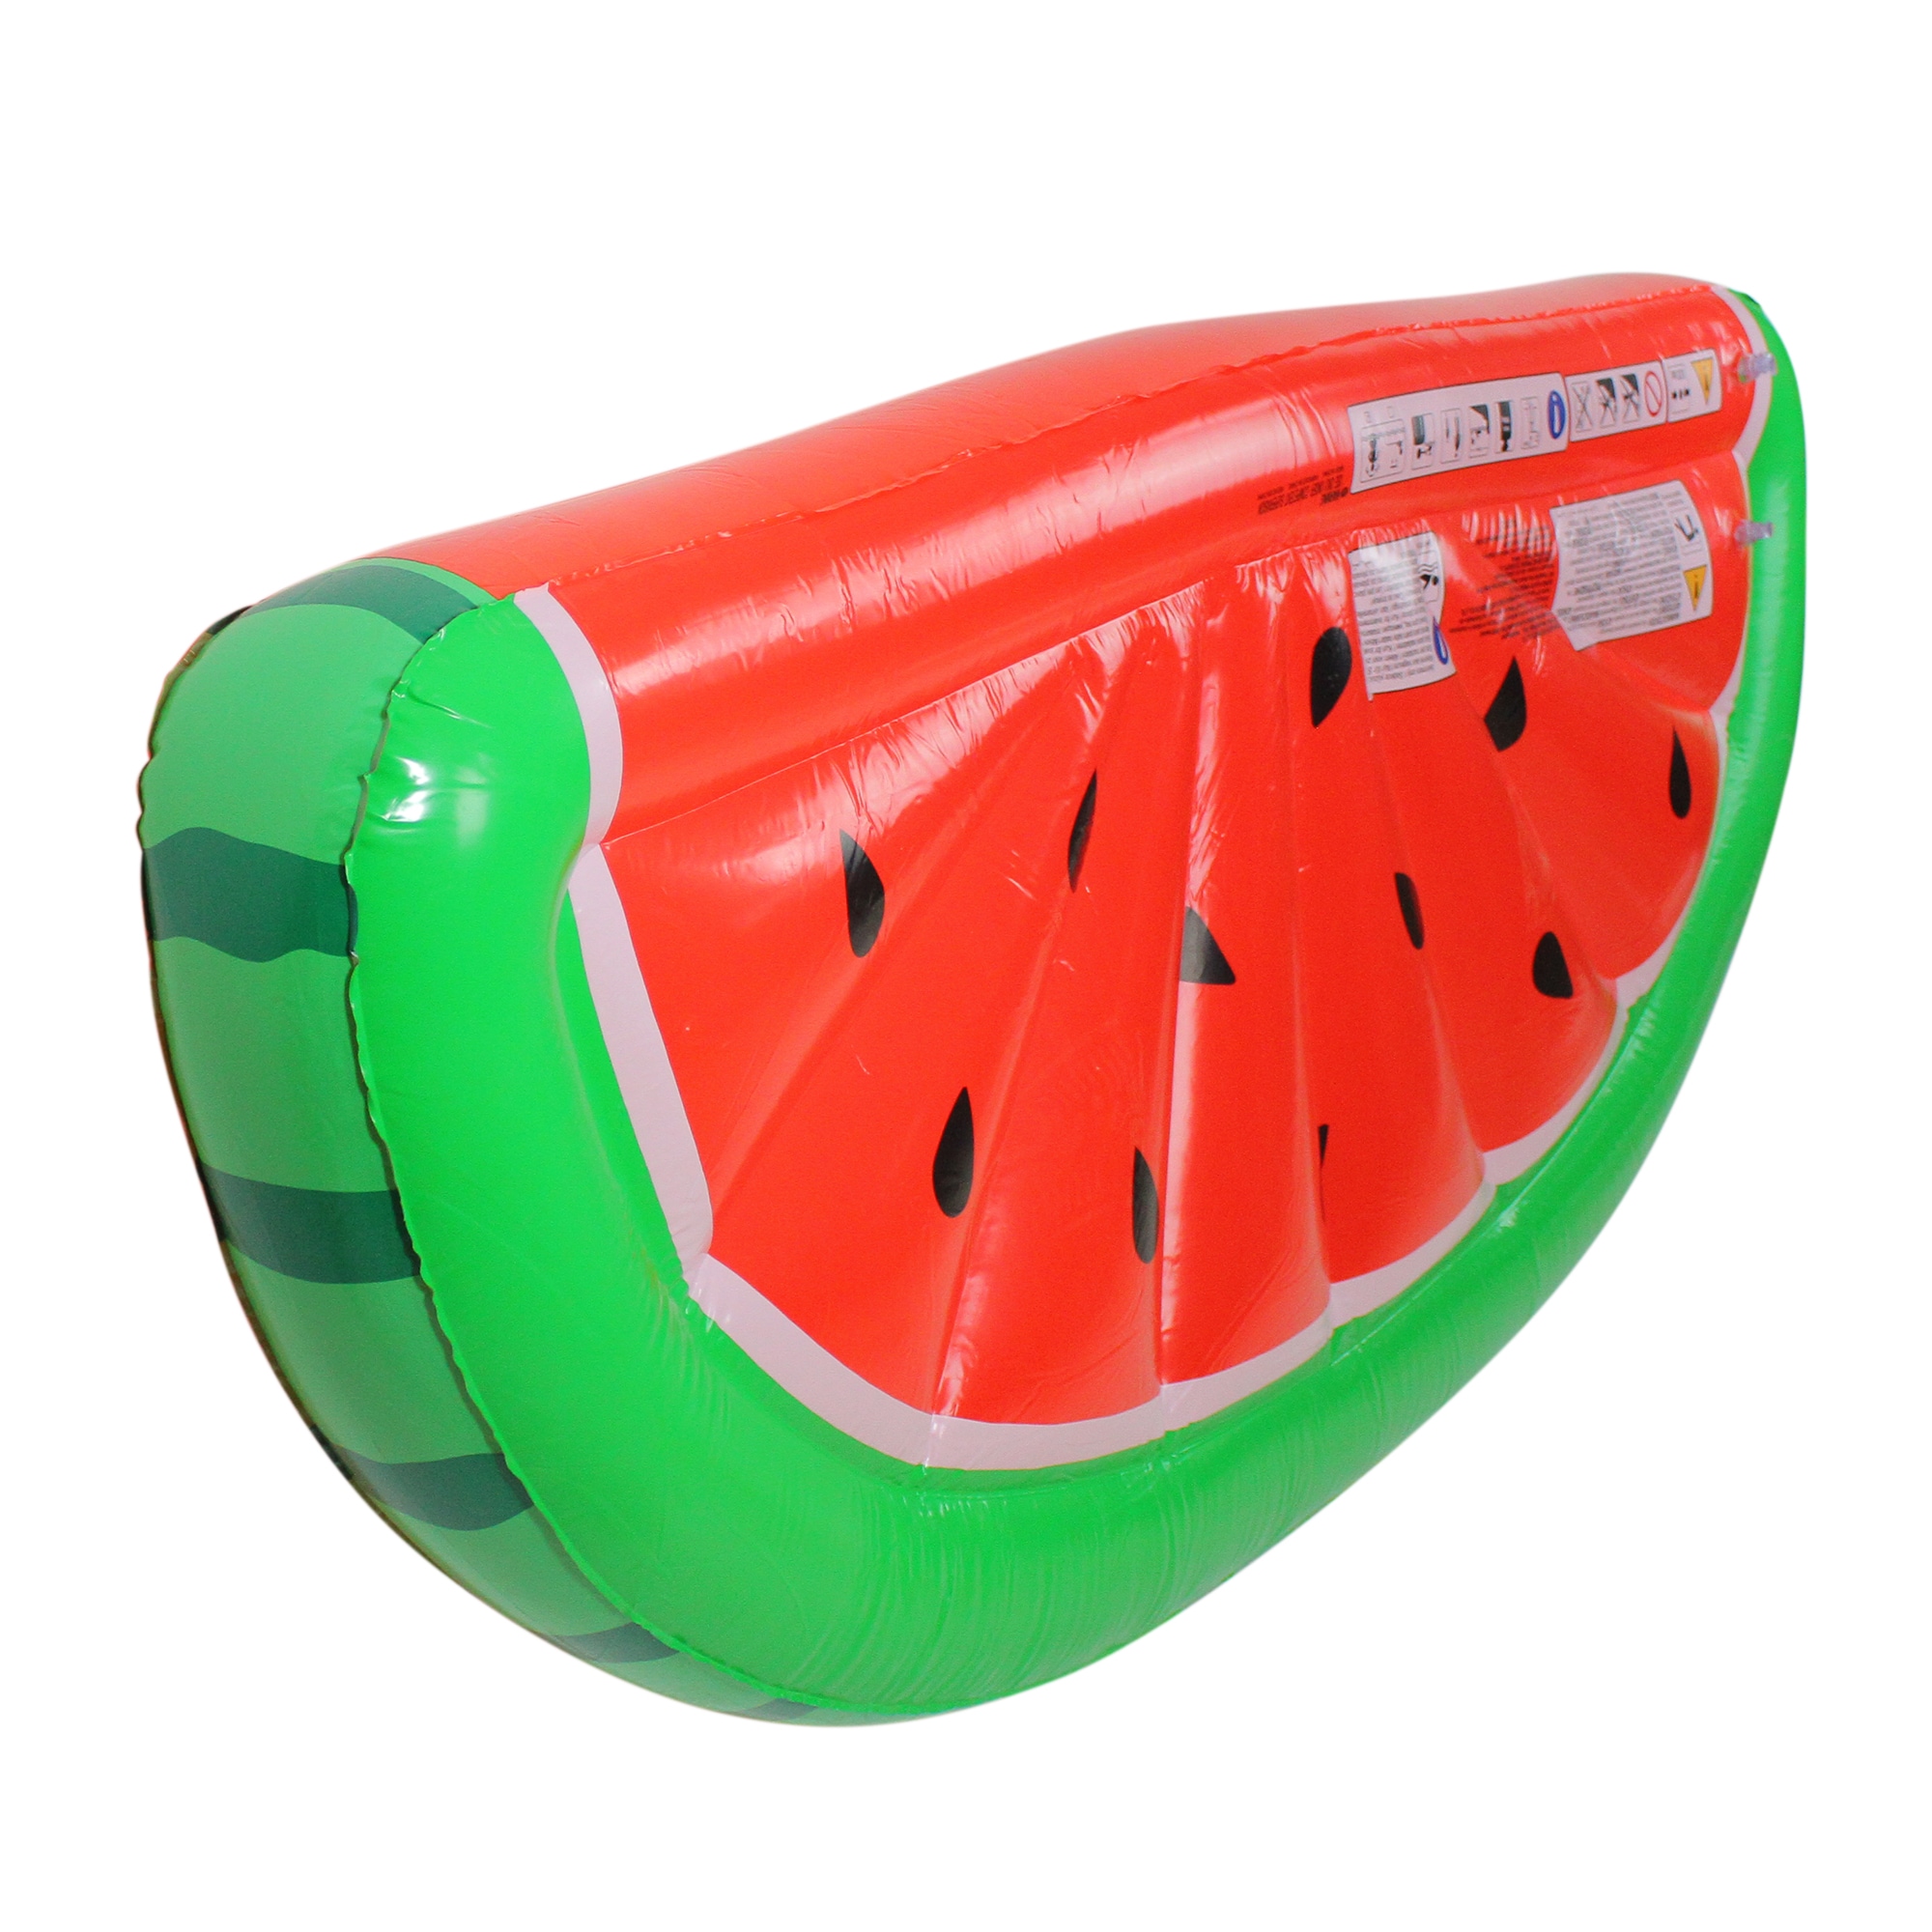 Watermelon Fishing Rod Set for Children, Portable Telescopic